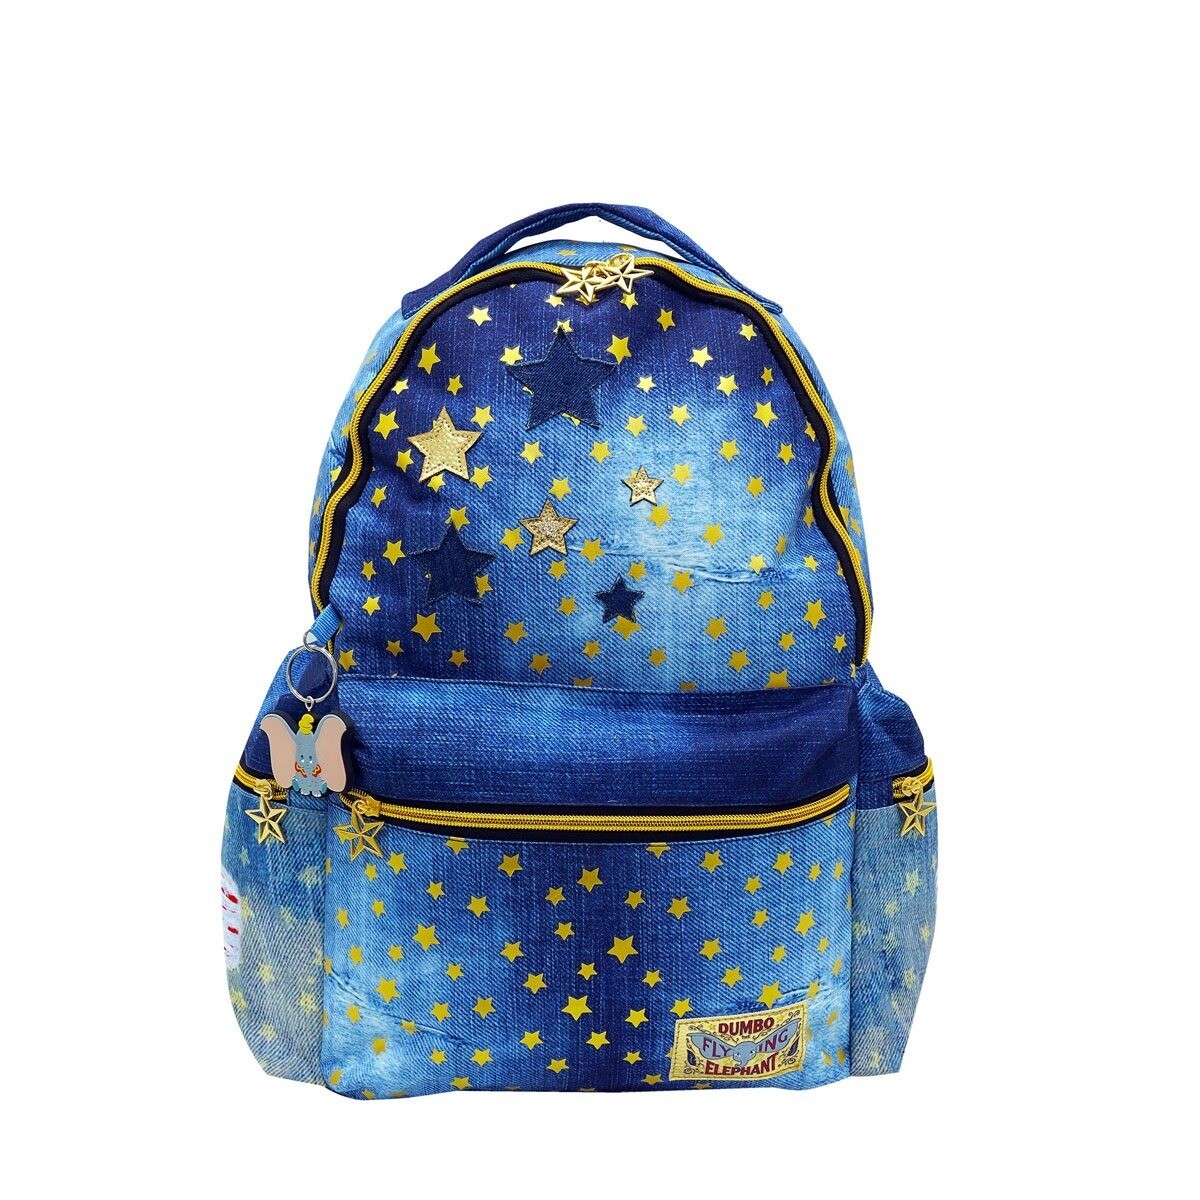 Bolsa Mochila Dumbo Azul Estrellas